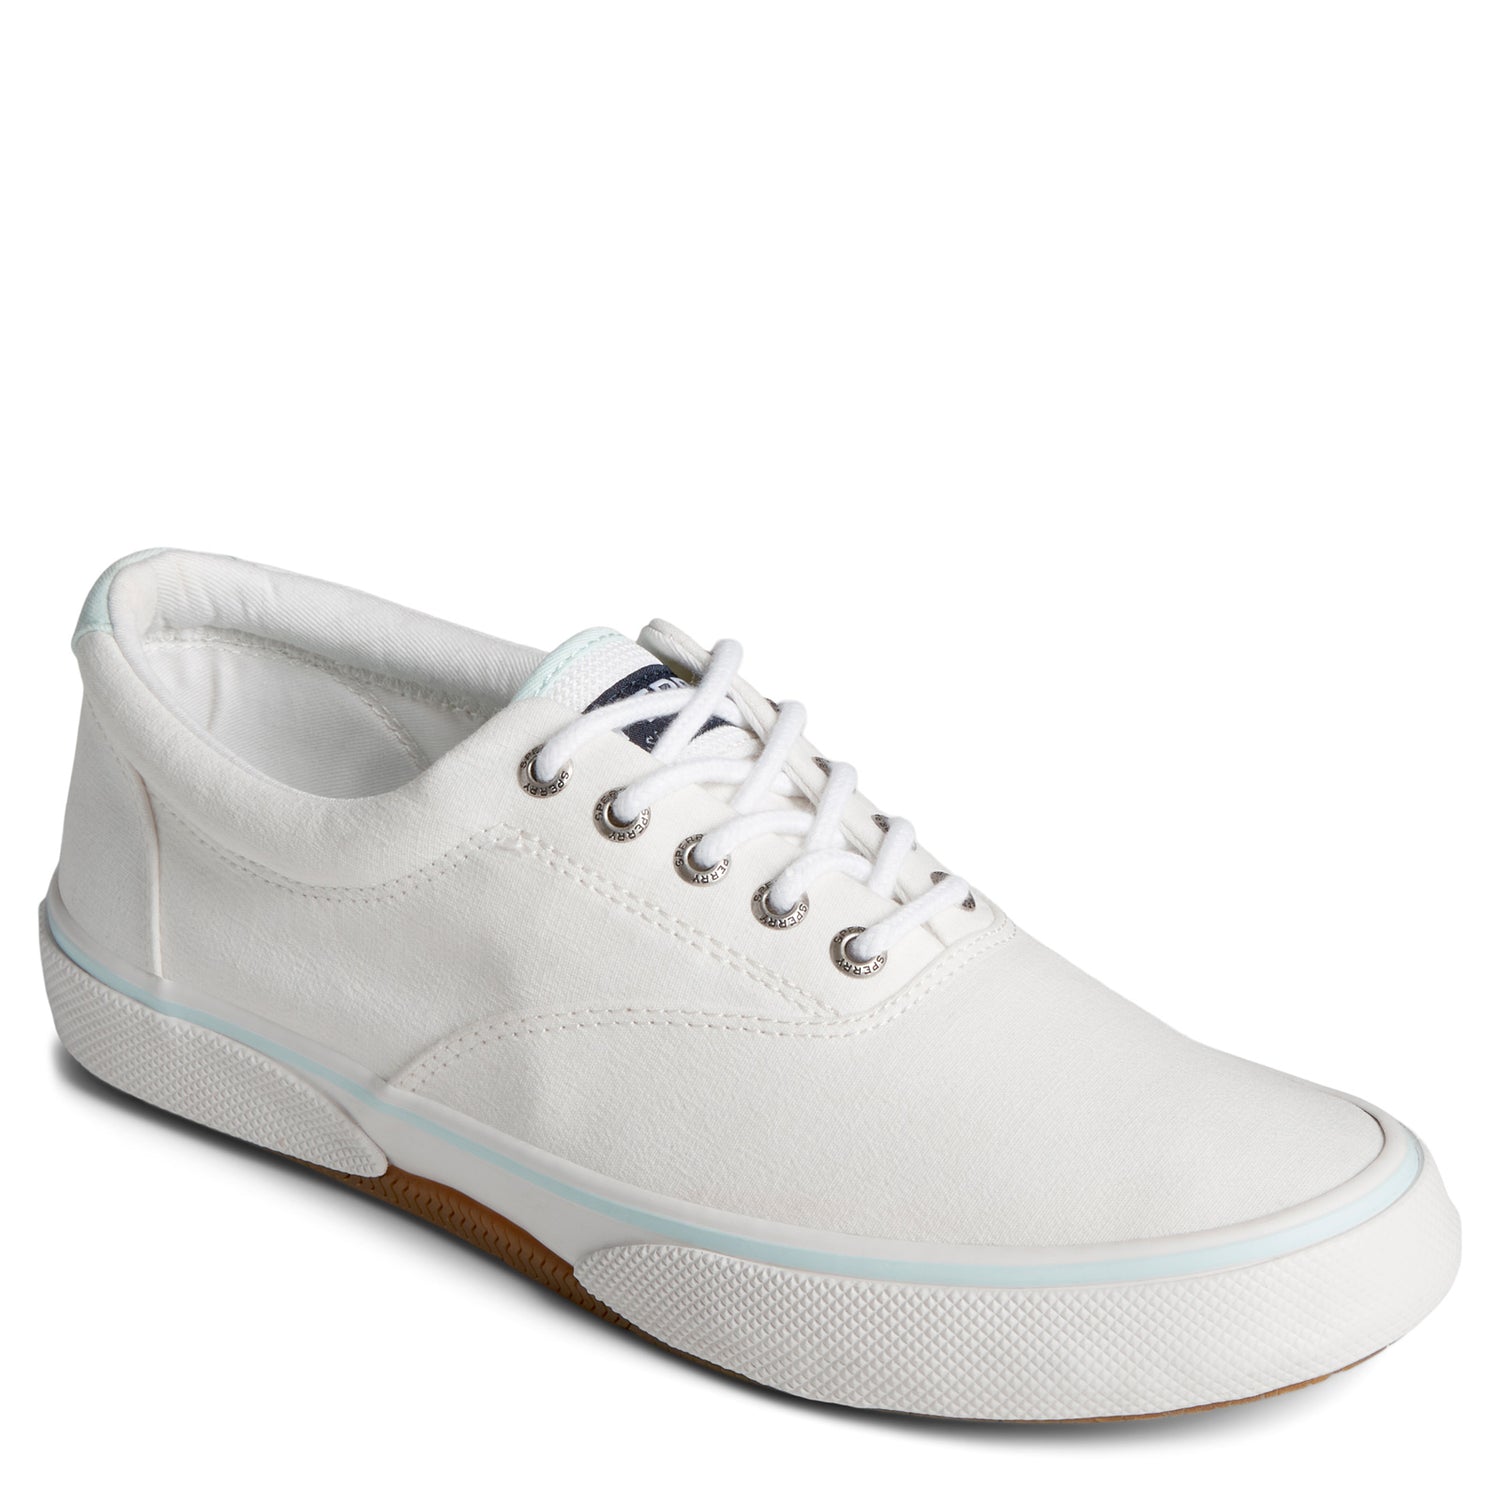 Vans Authentic Prep Retro sneakers in blue/white Size 9.5